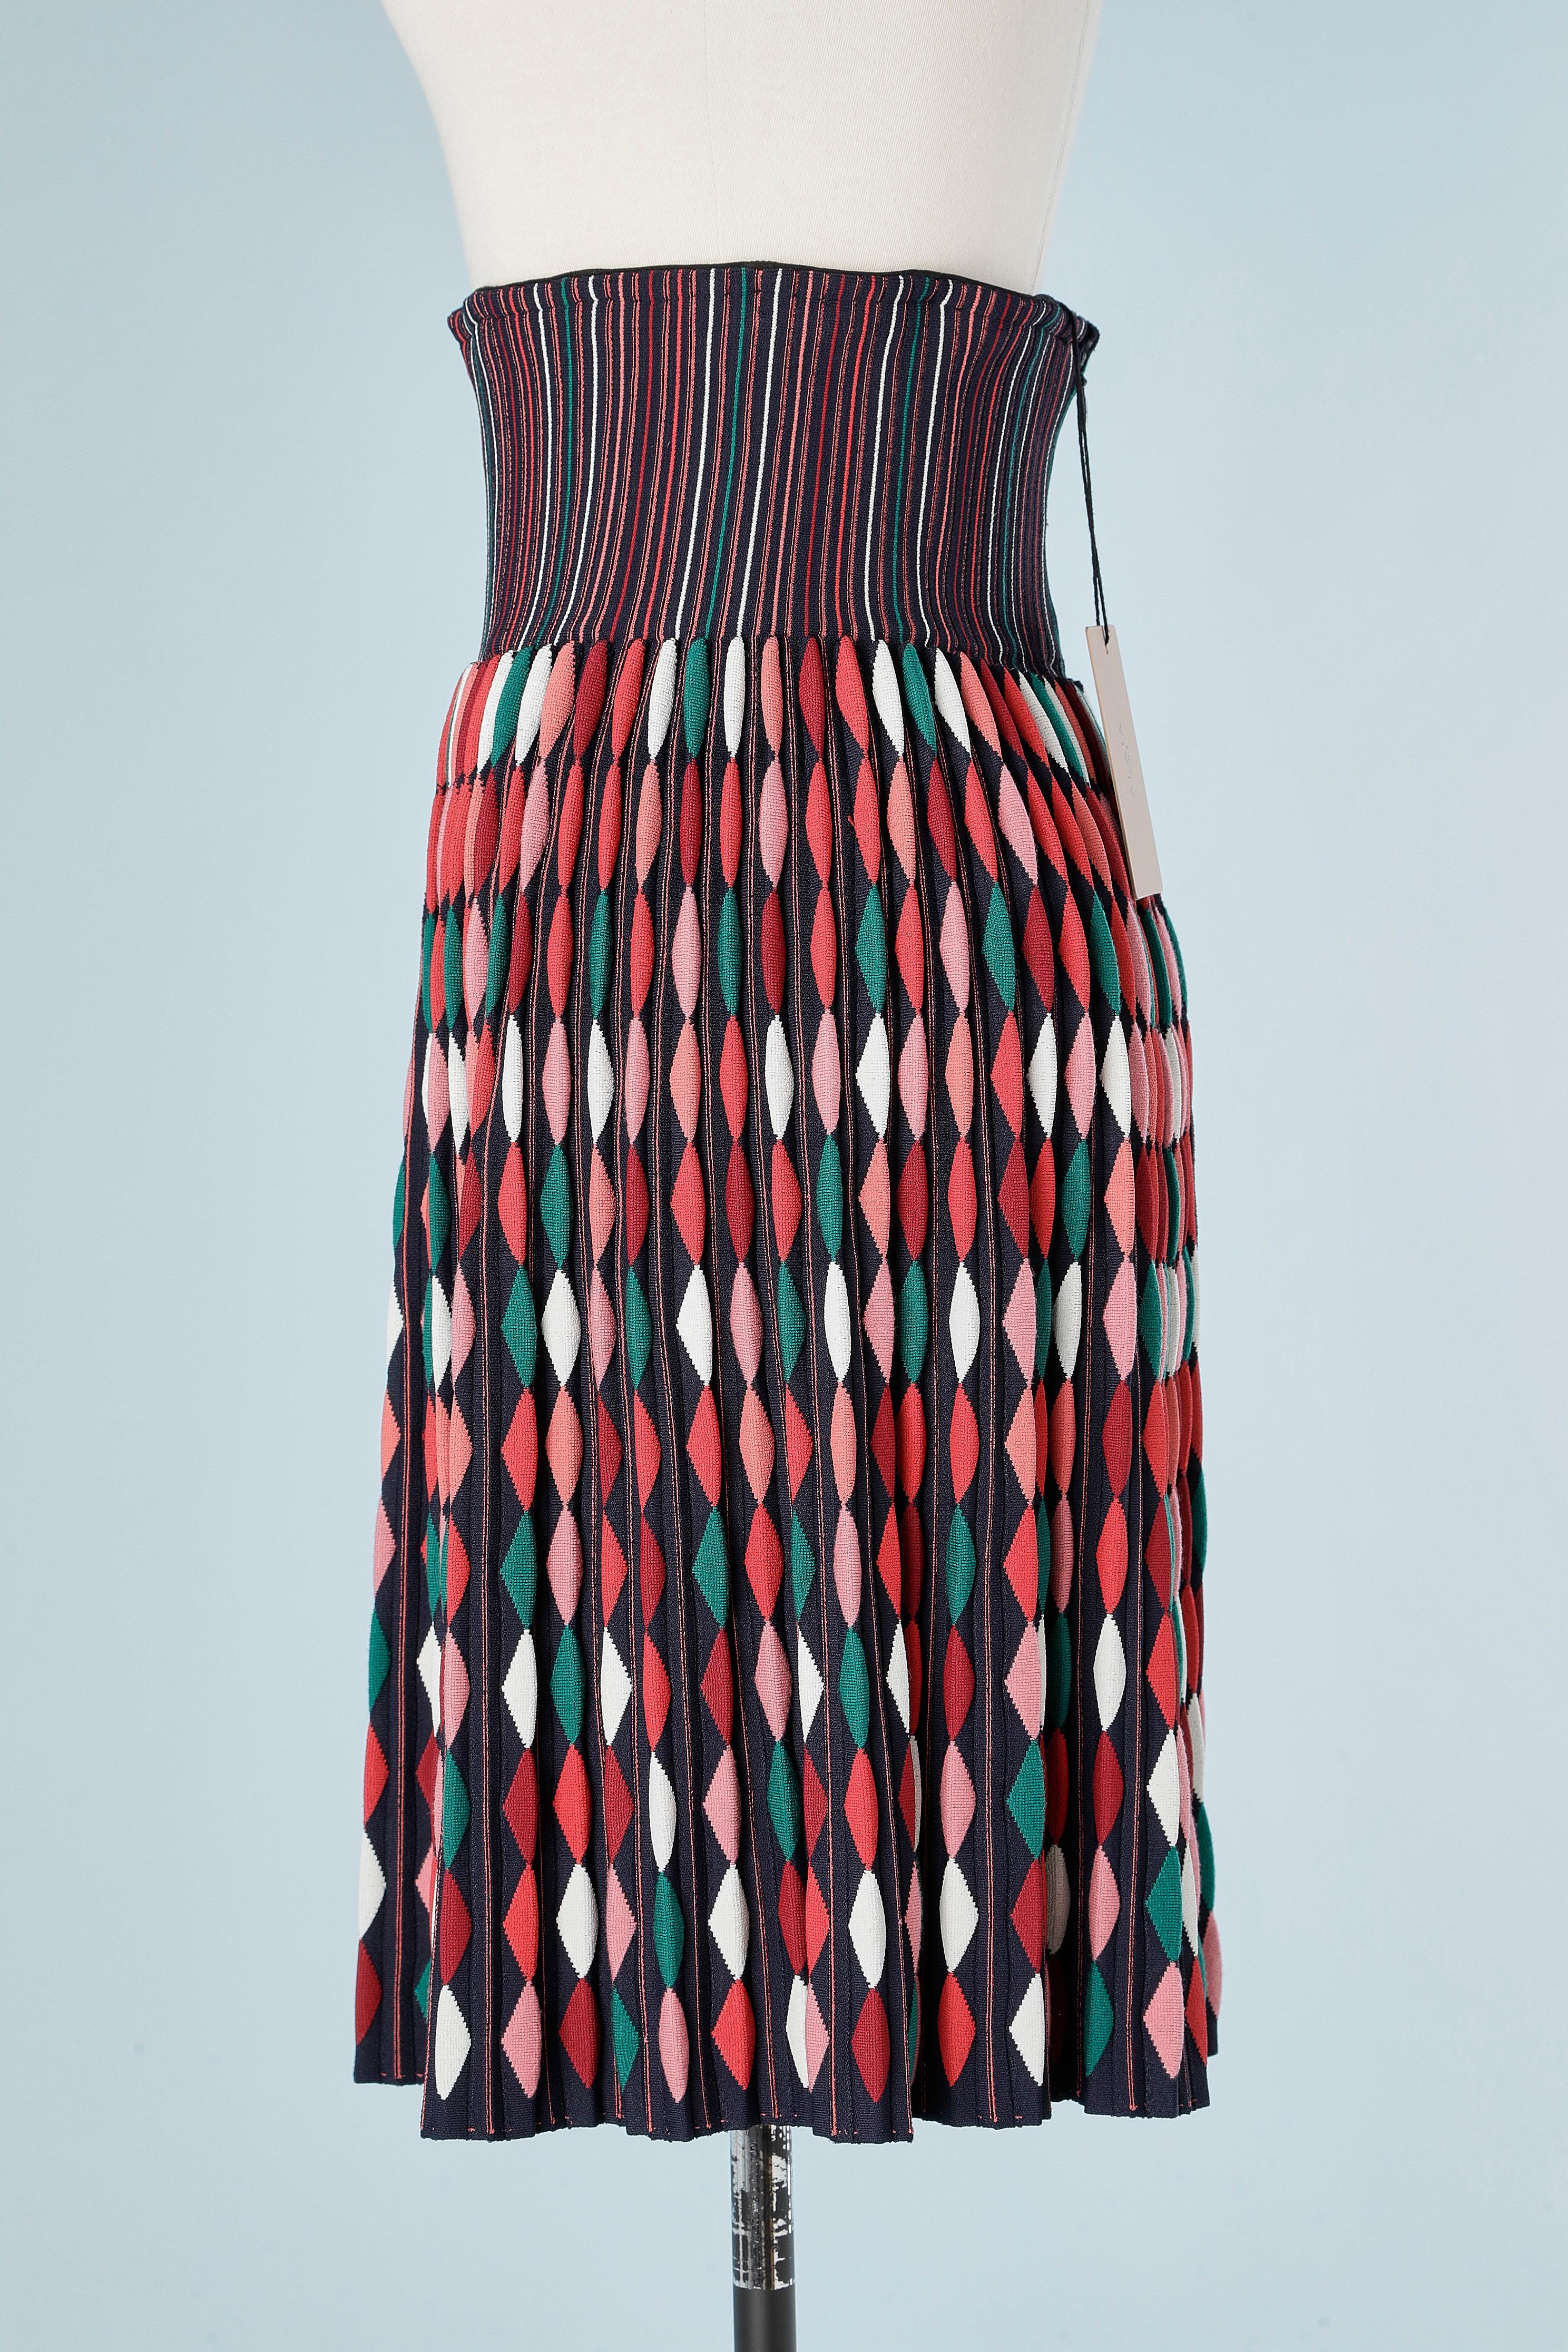 Arlequin jacquard pleated  knit skirt AlaÏa  In New Condition For Sale In Saint-Ouen-Sur-Seine, FR